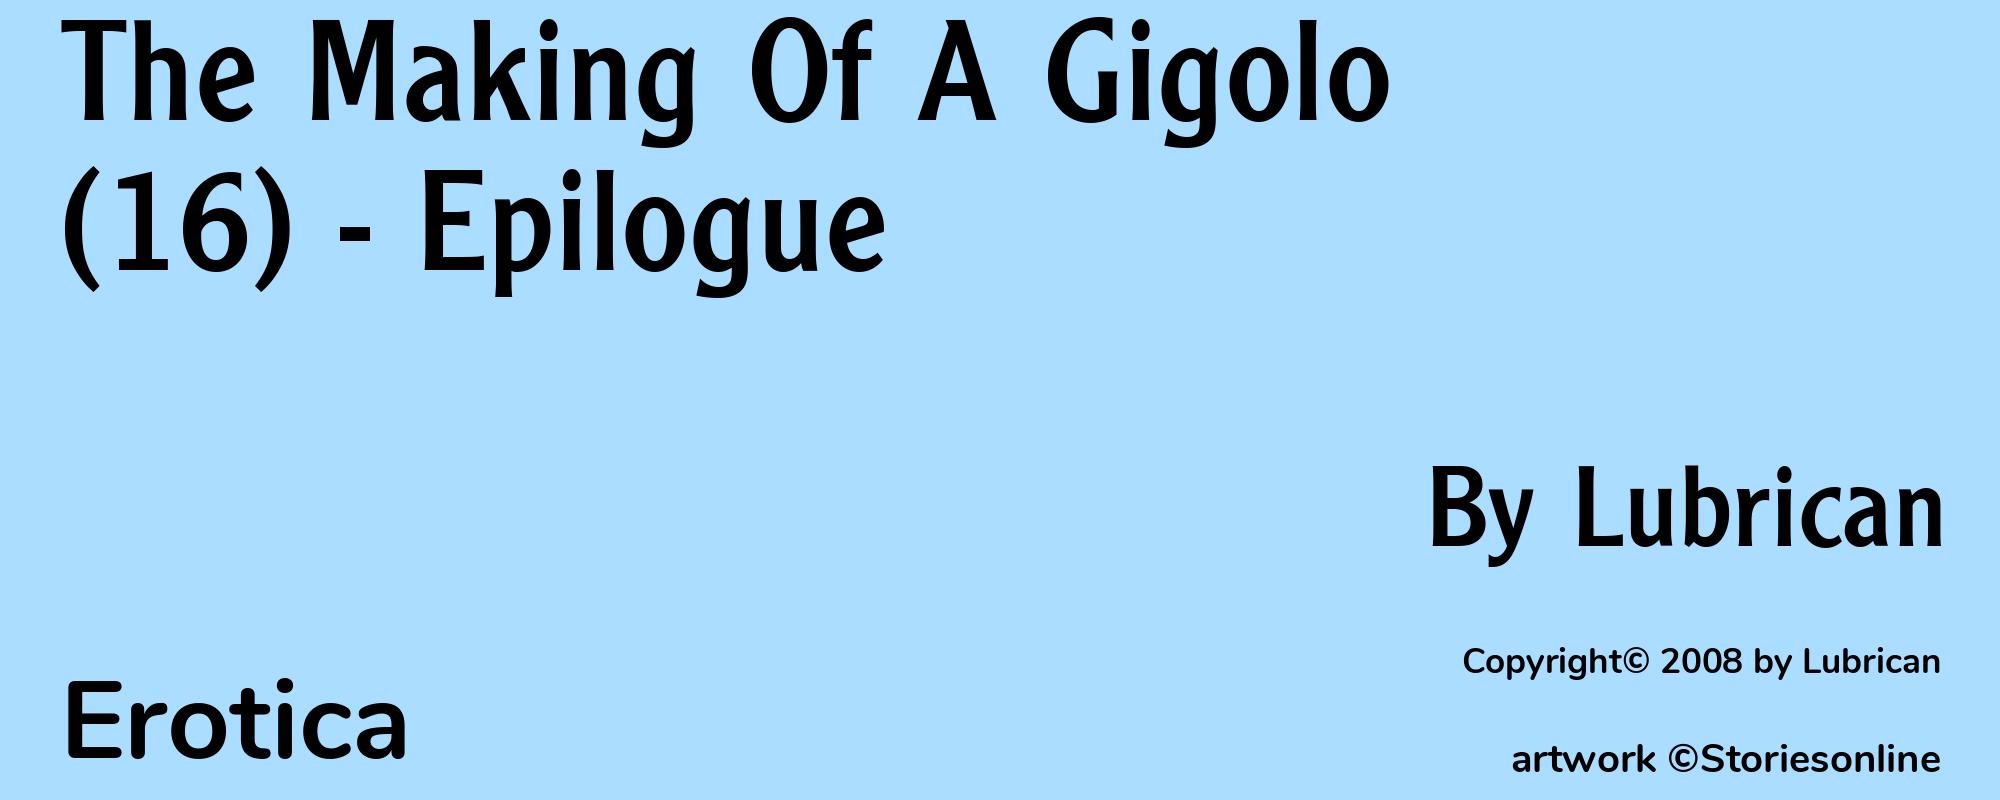 The Making Of A Gigolo (16) - Epilogue - Cover